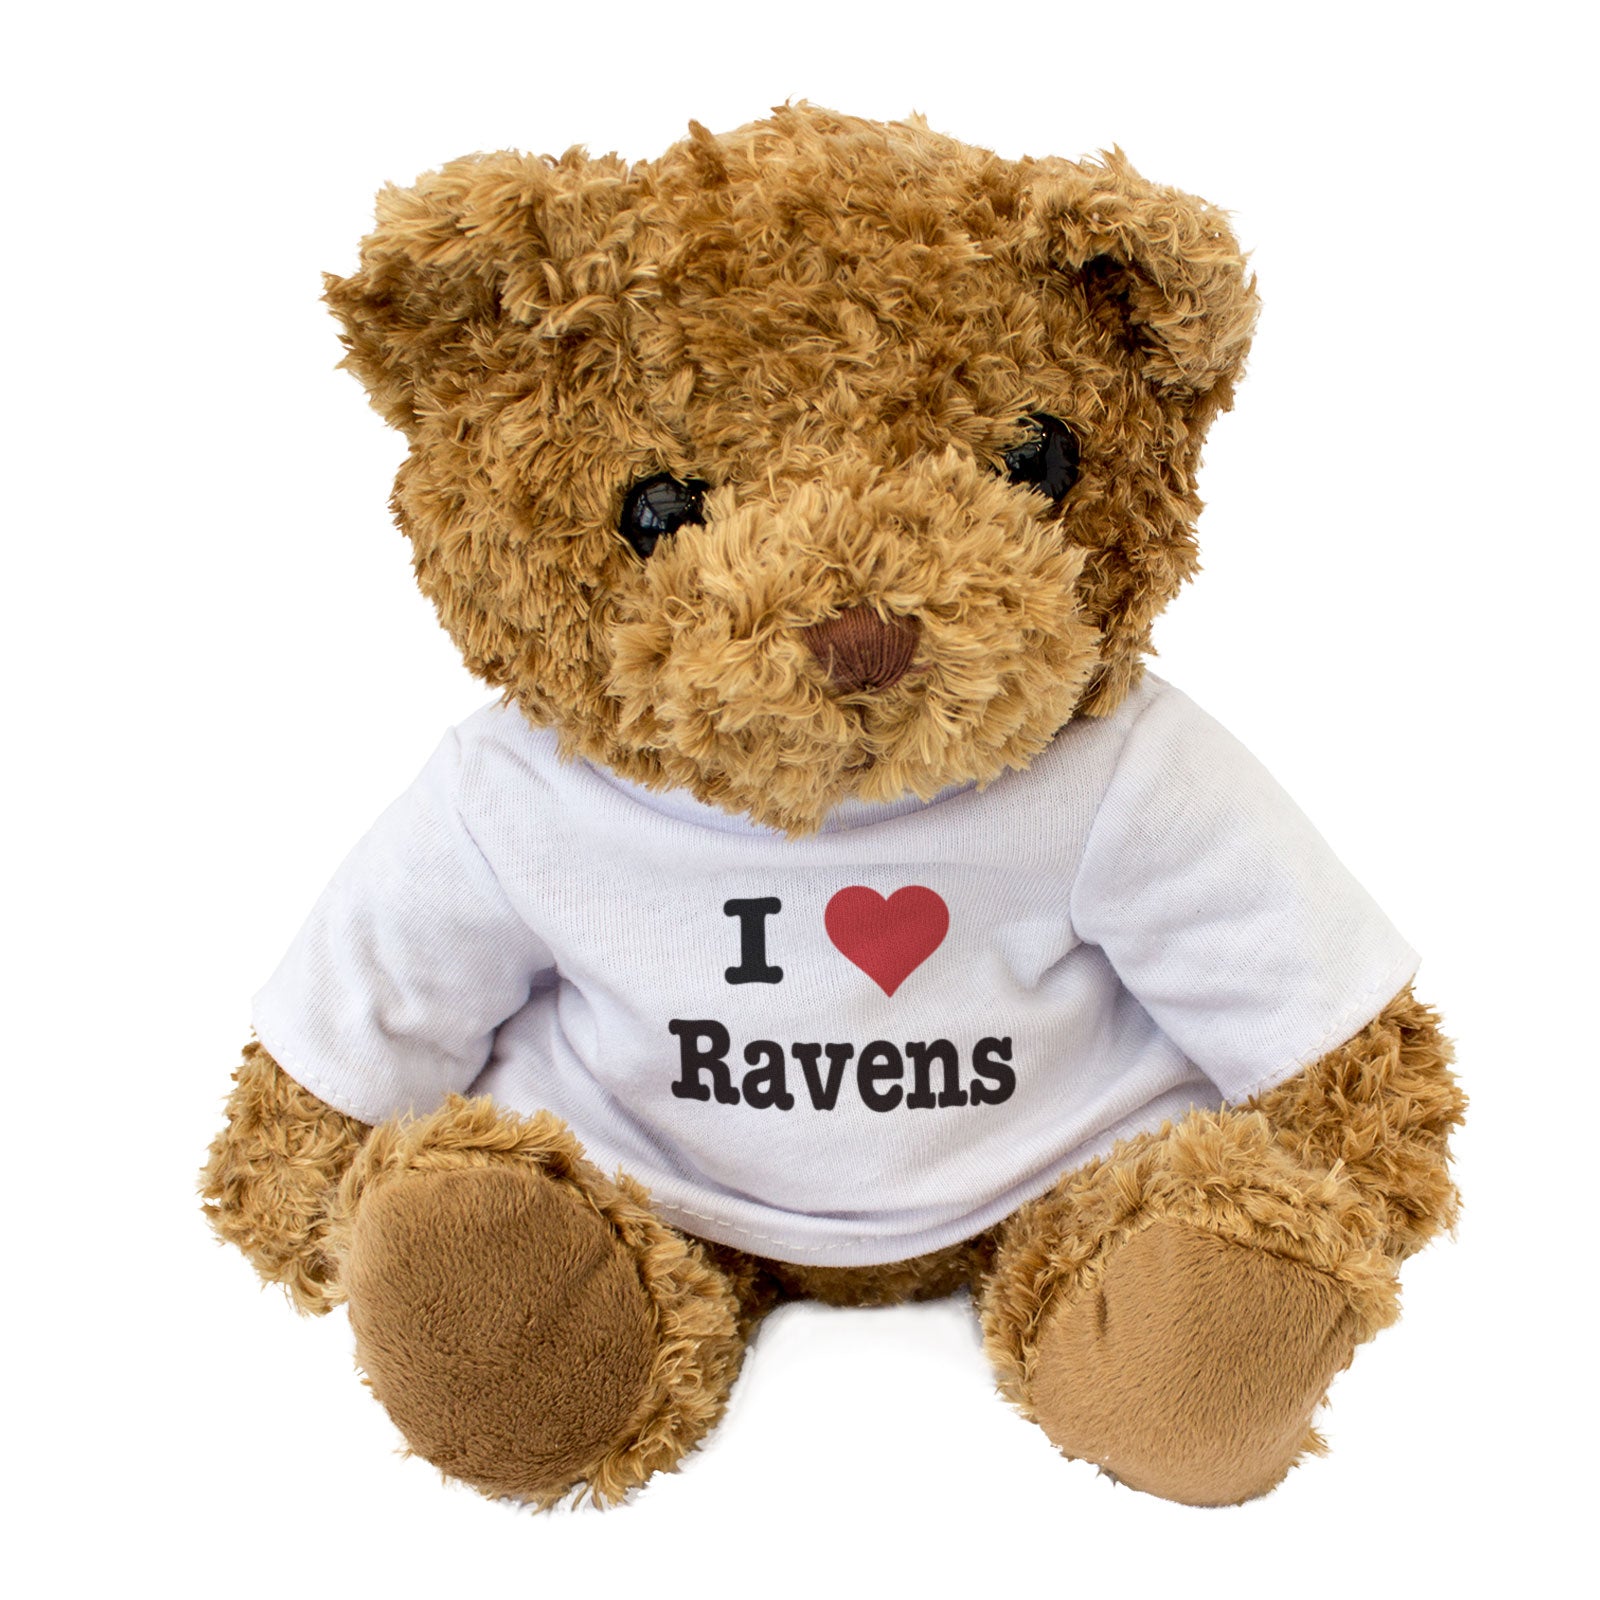 I Love Ravens - Teddy Bear